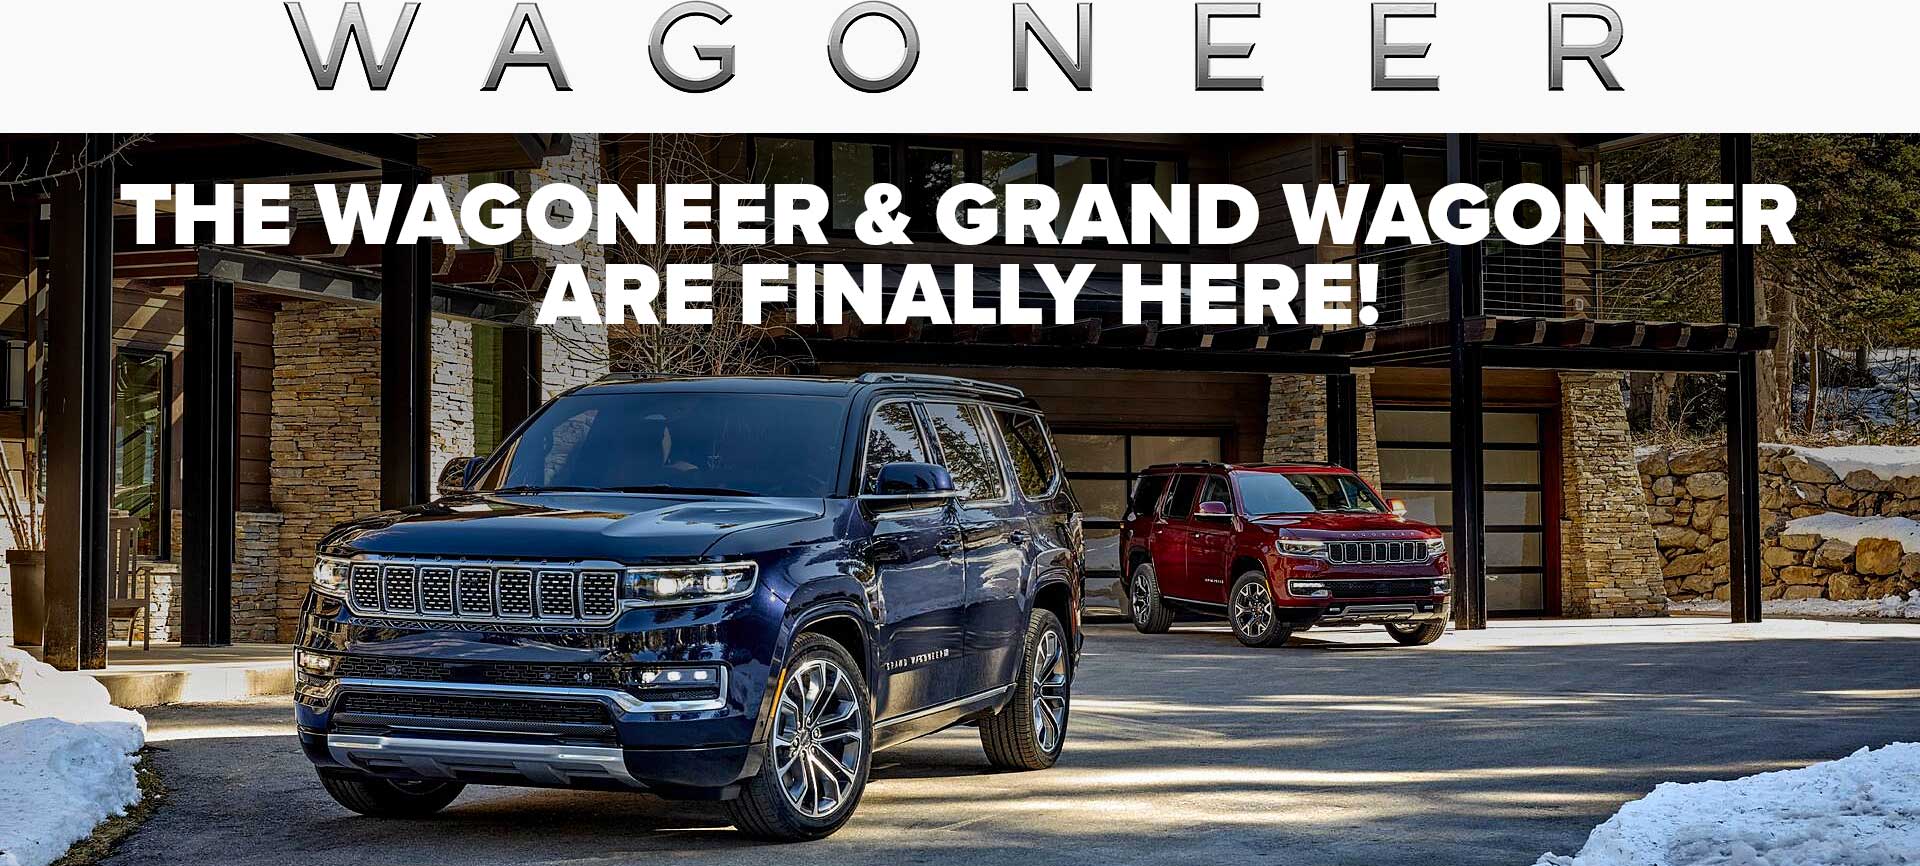 The Wagoneer & Grand Wagoneer are Finally Here!